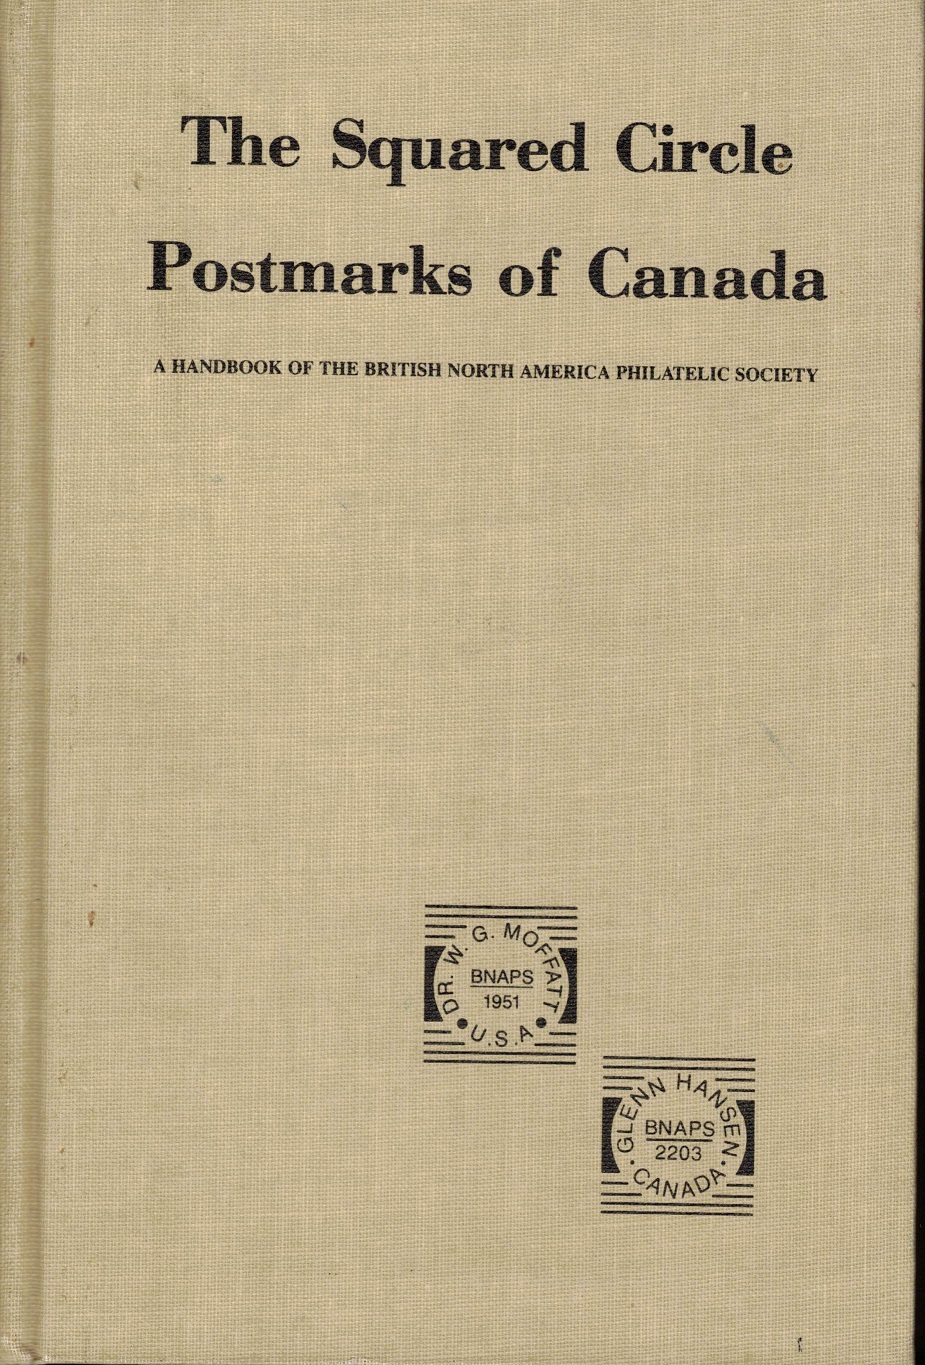 The Squared Circle Postmarks Of Canada Moffatt And Hansen 1981 Scott Traquair Philatelist